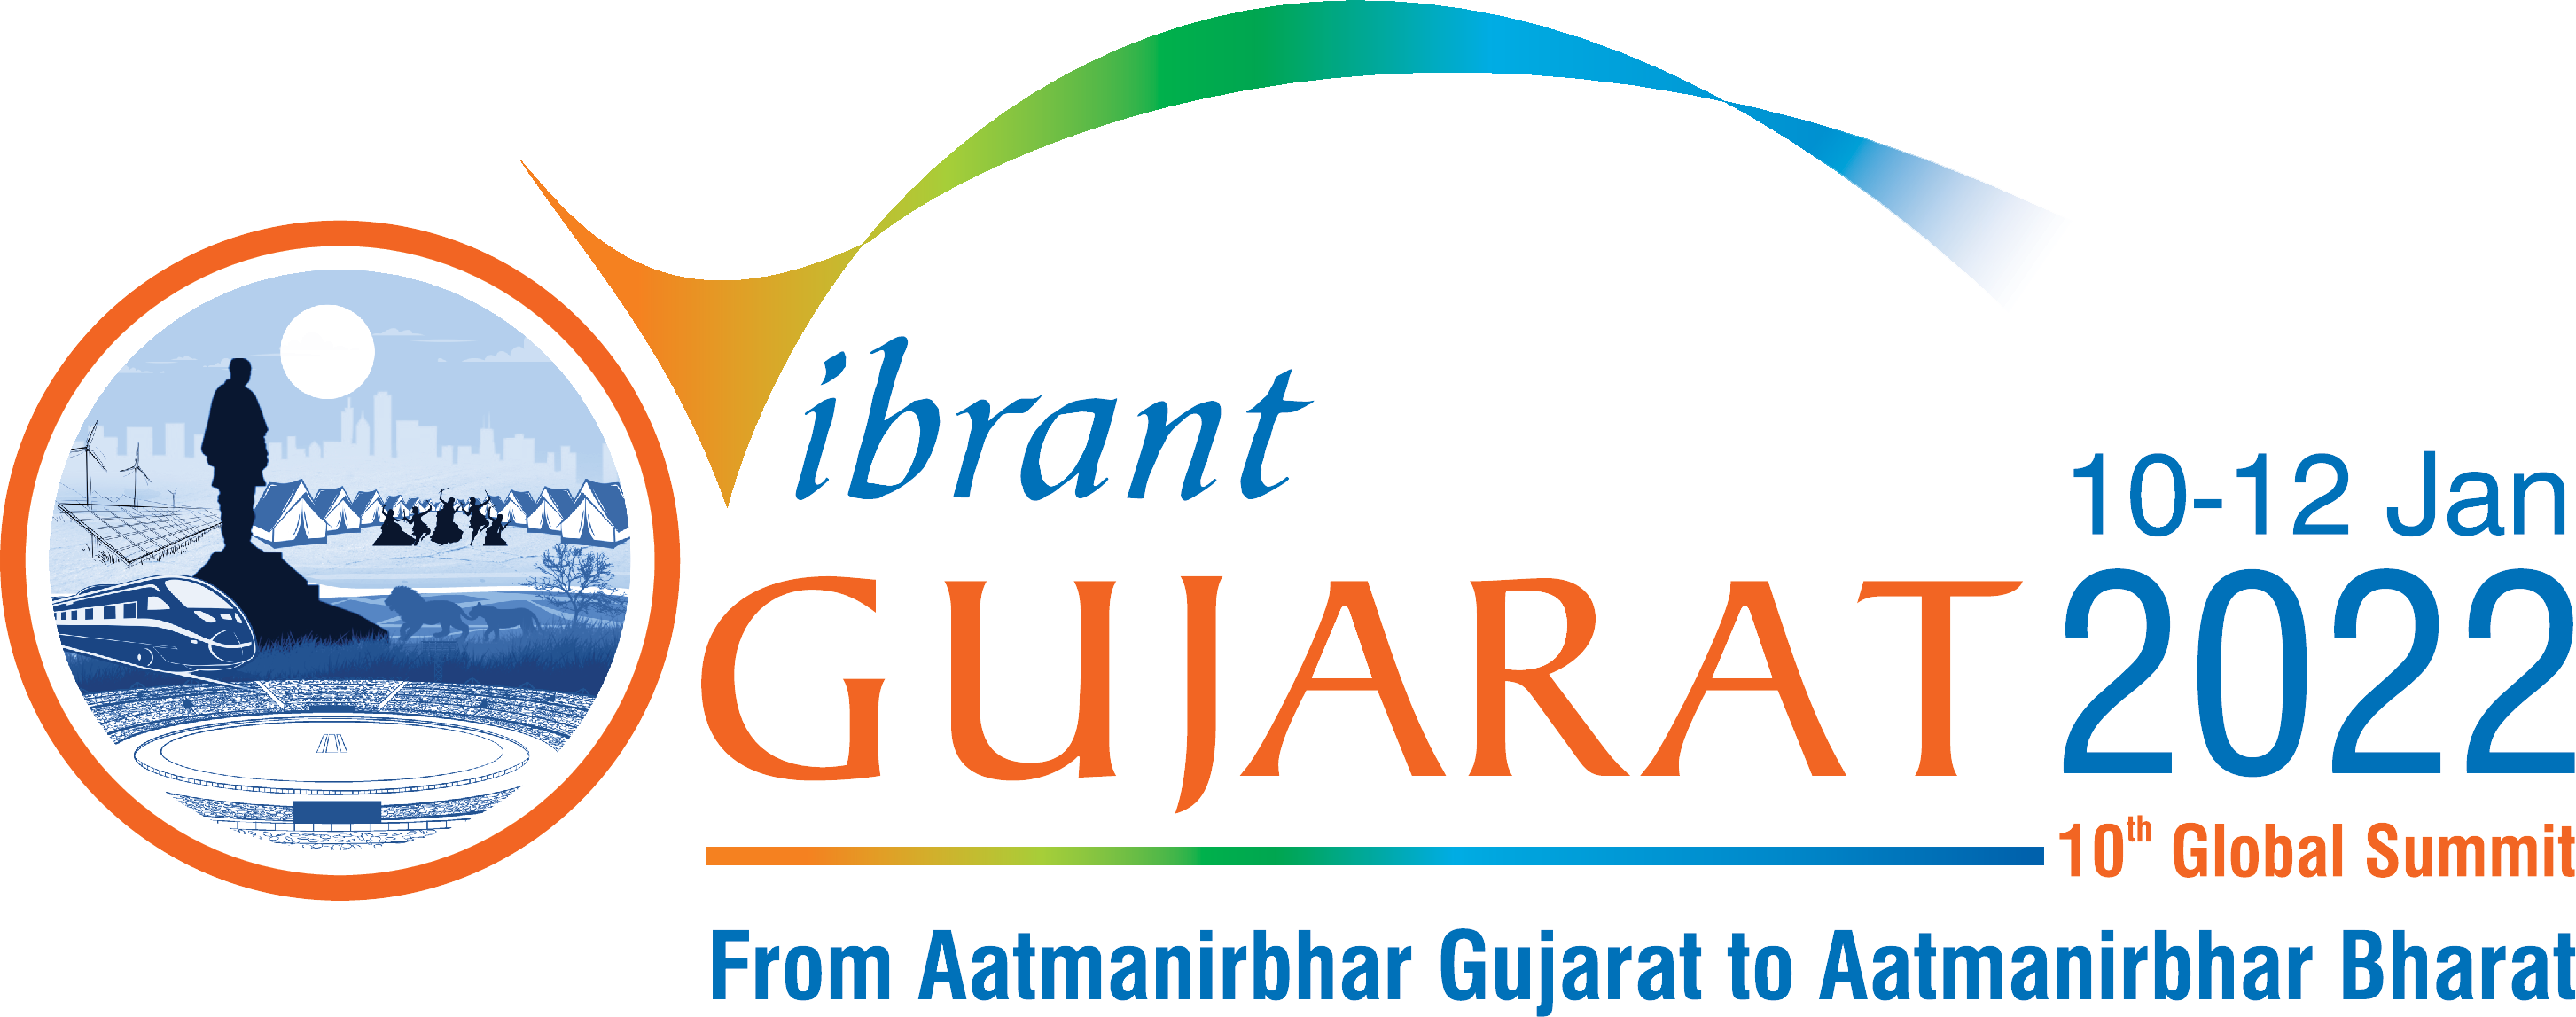 International Investment Summit “Vibrant Gujarat” was canceled